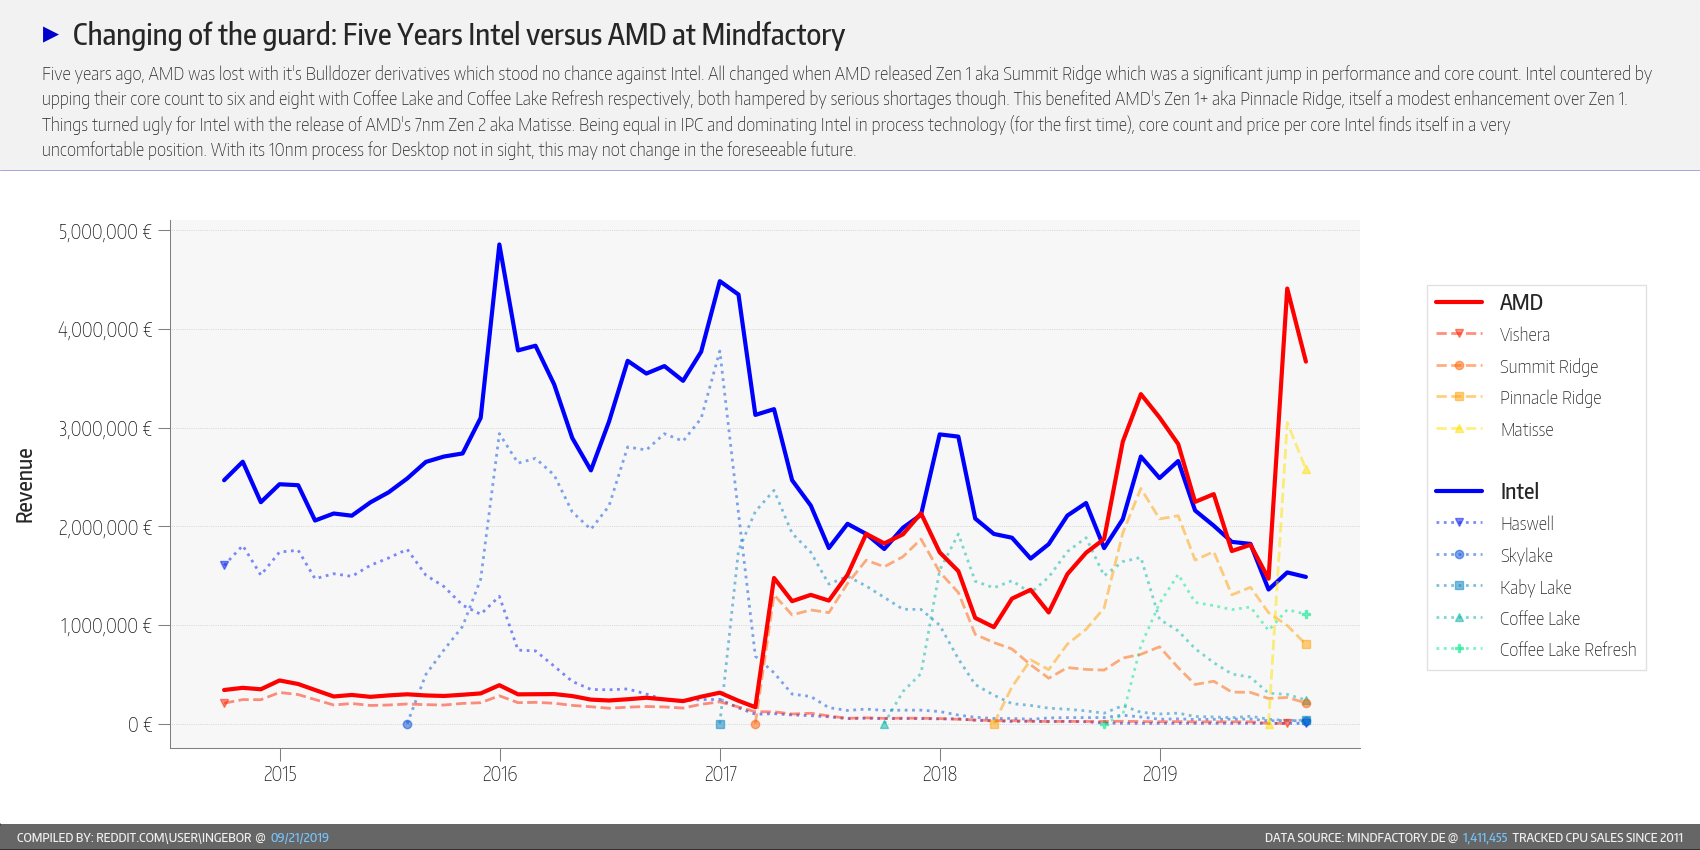 AMD Vs Intel Renovadas 2015-2019